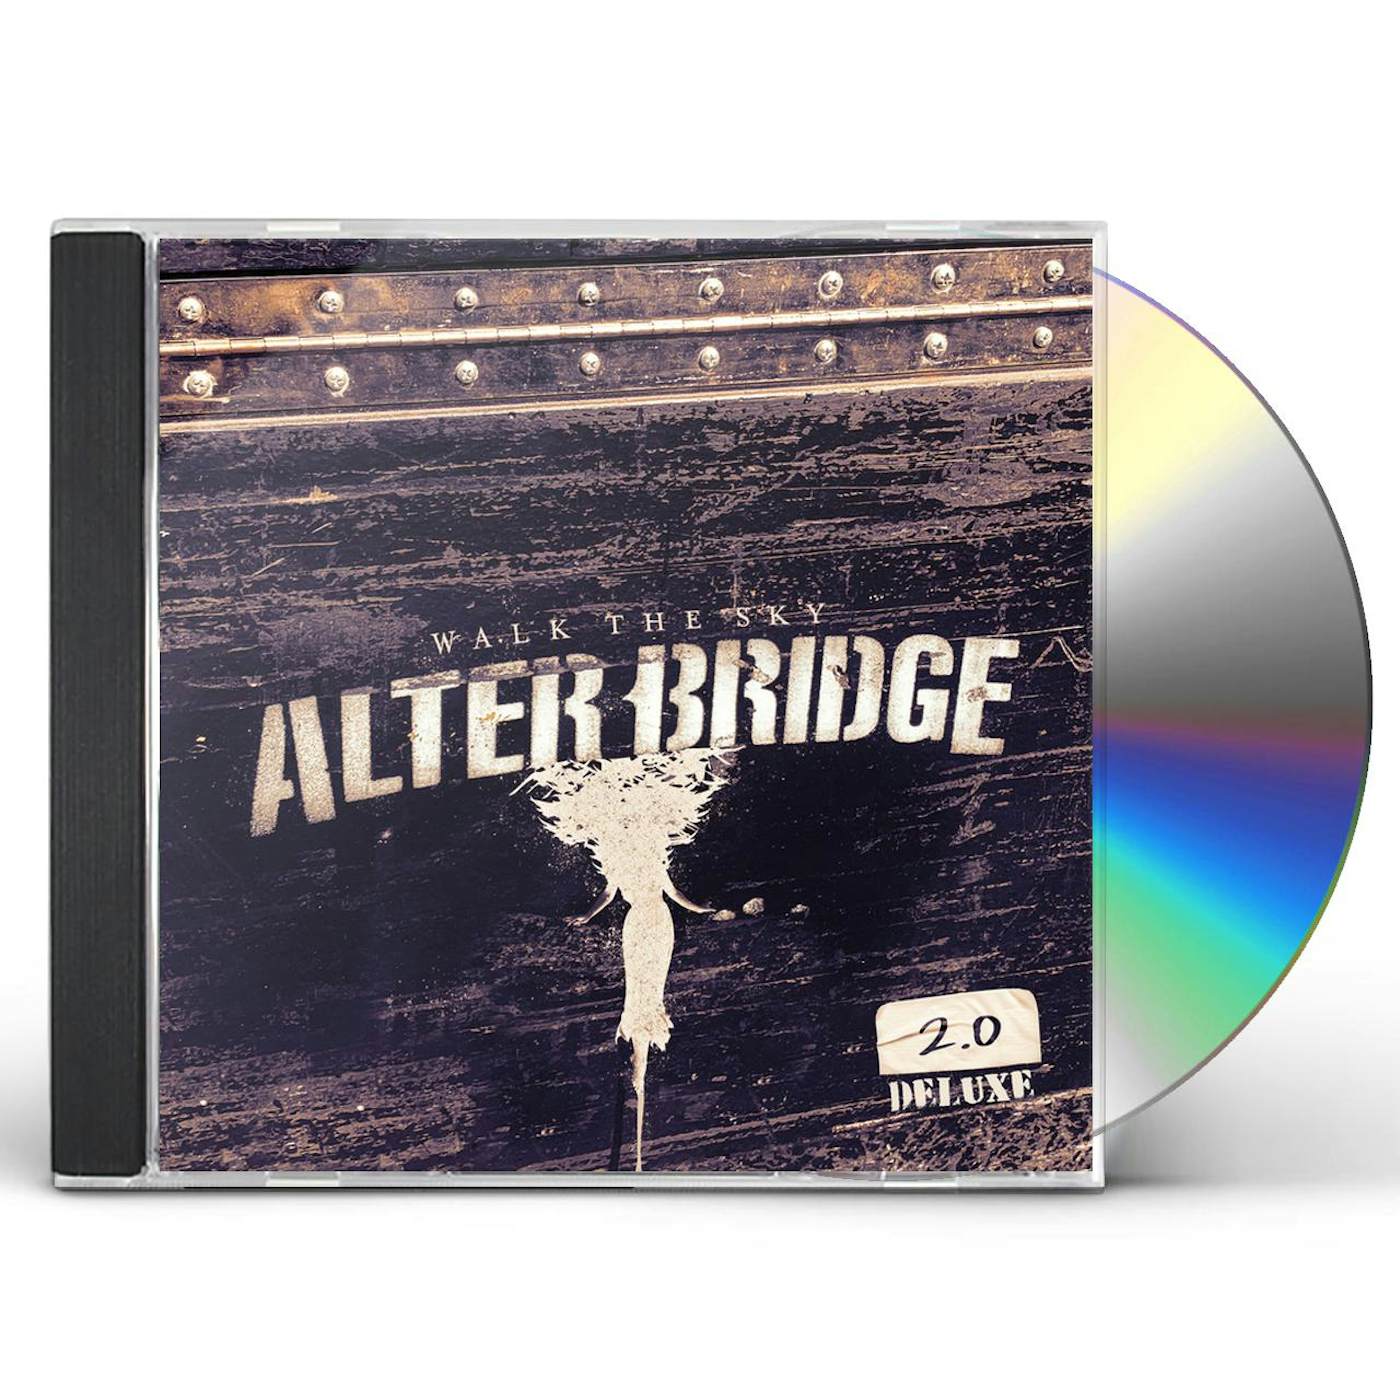 Alter Bridge WALK THE SKY 2.0 CD